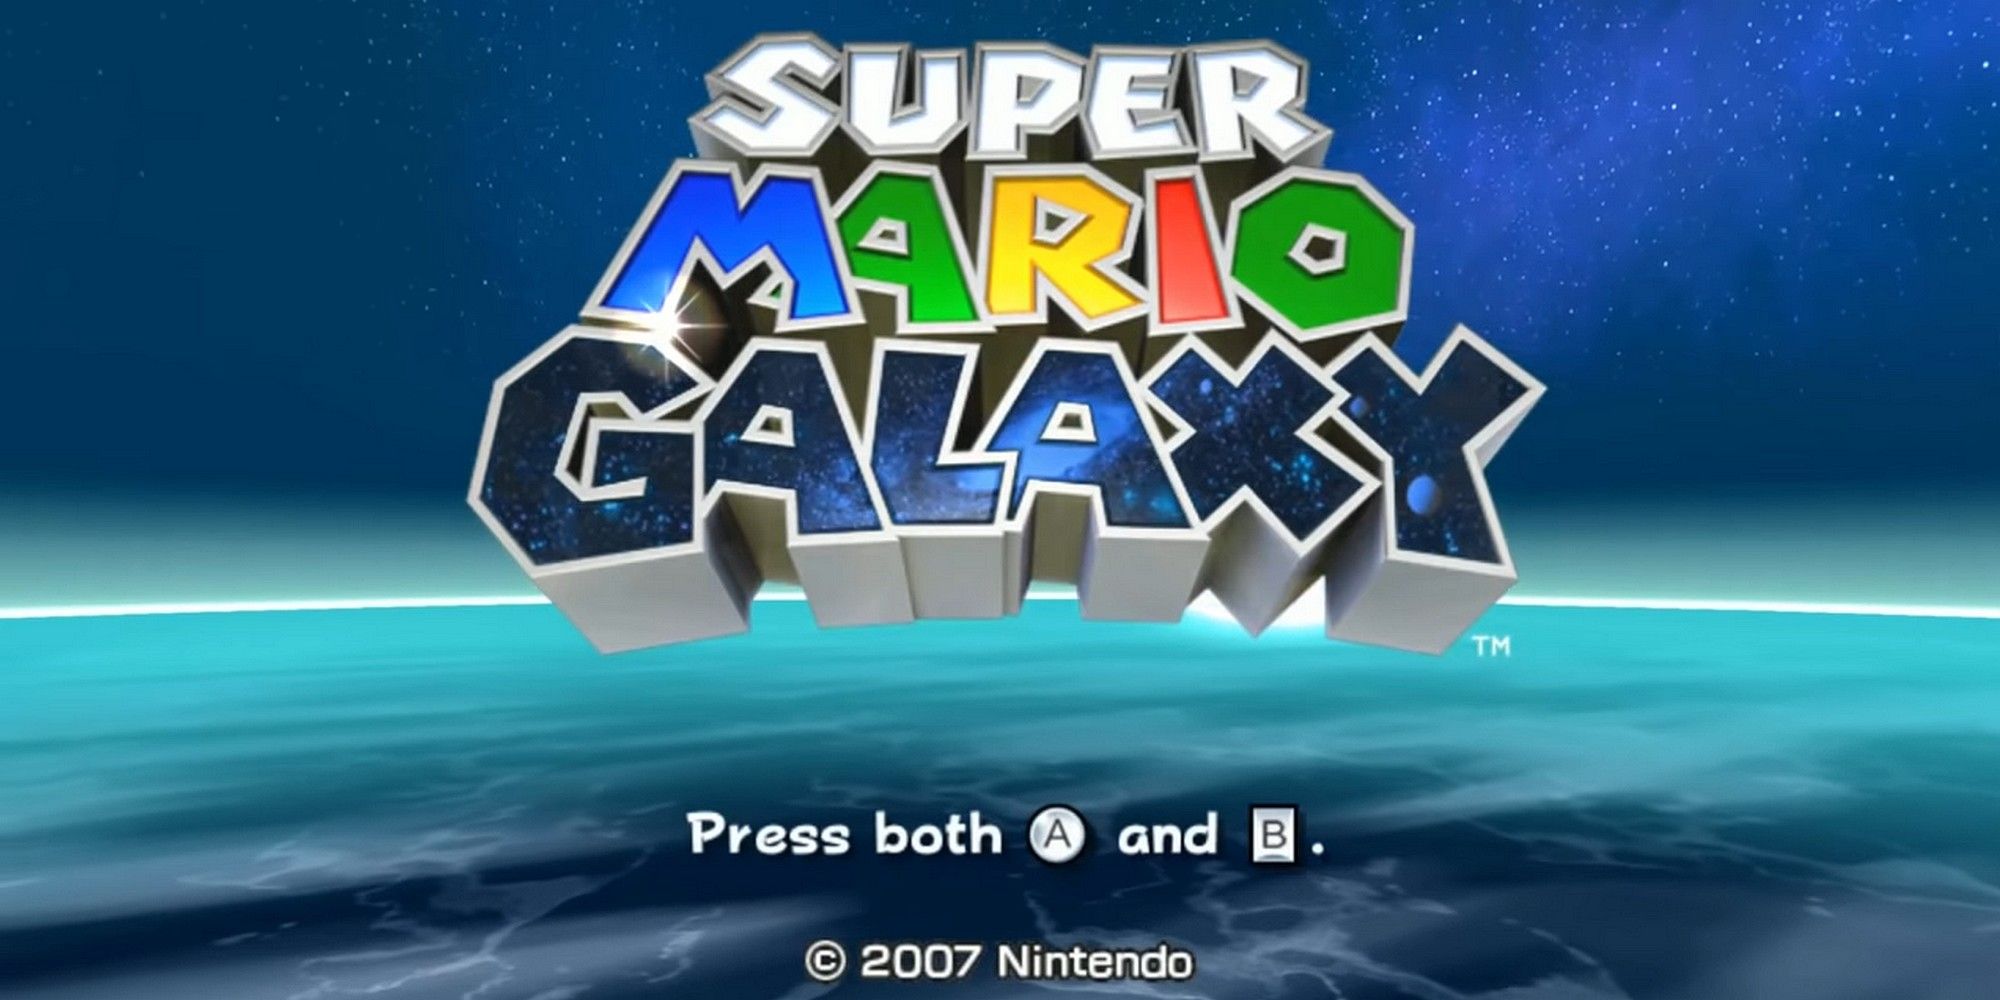 super mario galaxy logo start screen all mainline mario games in order